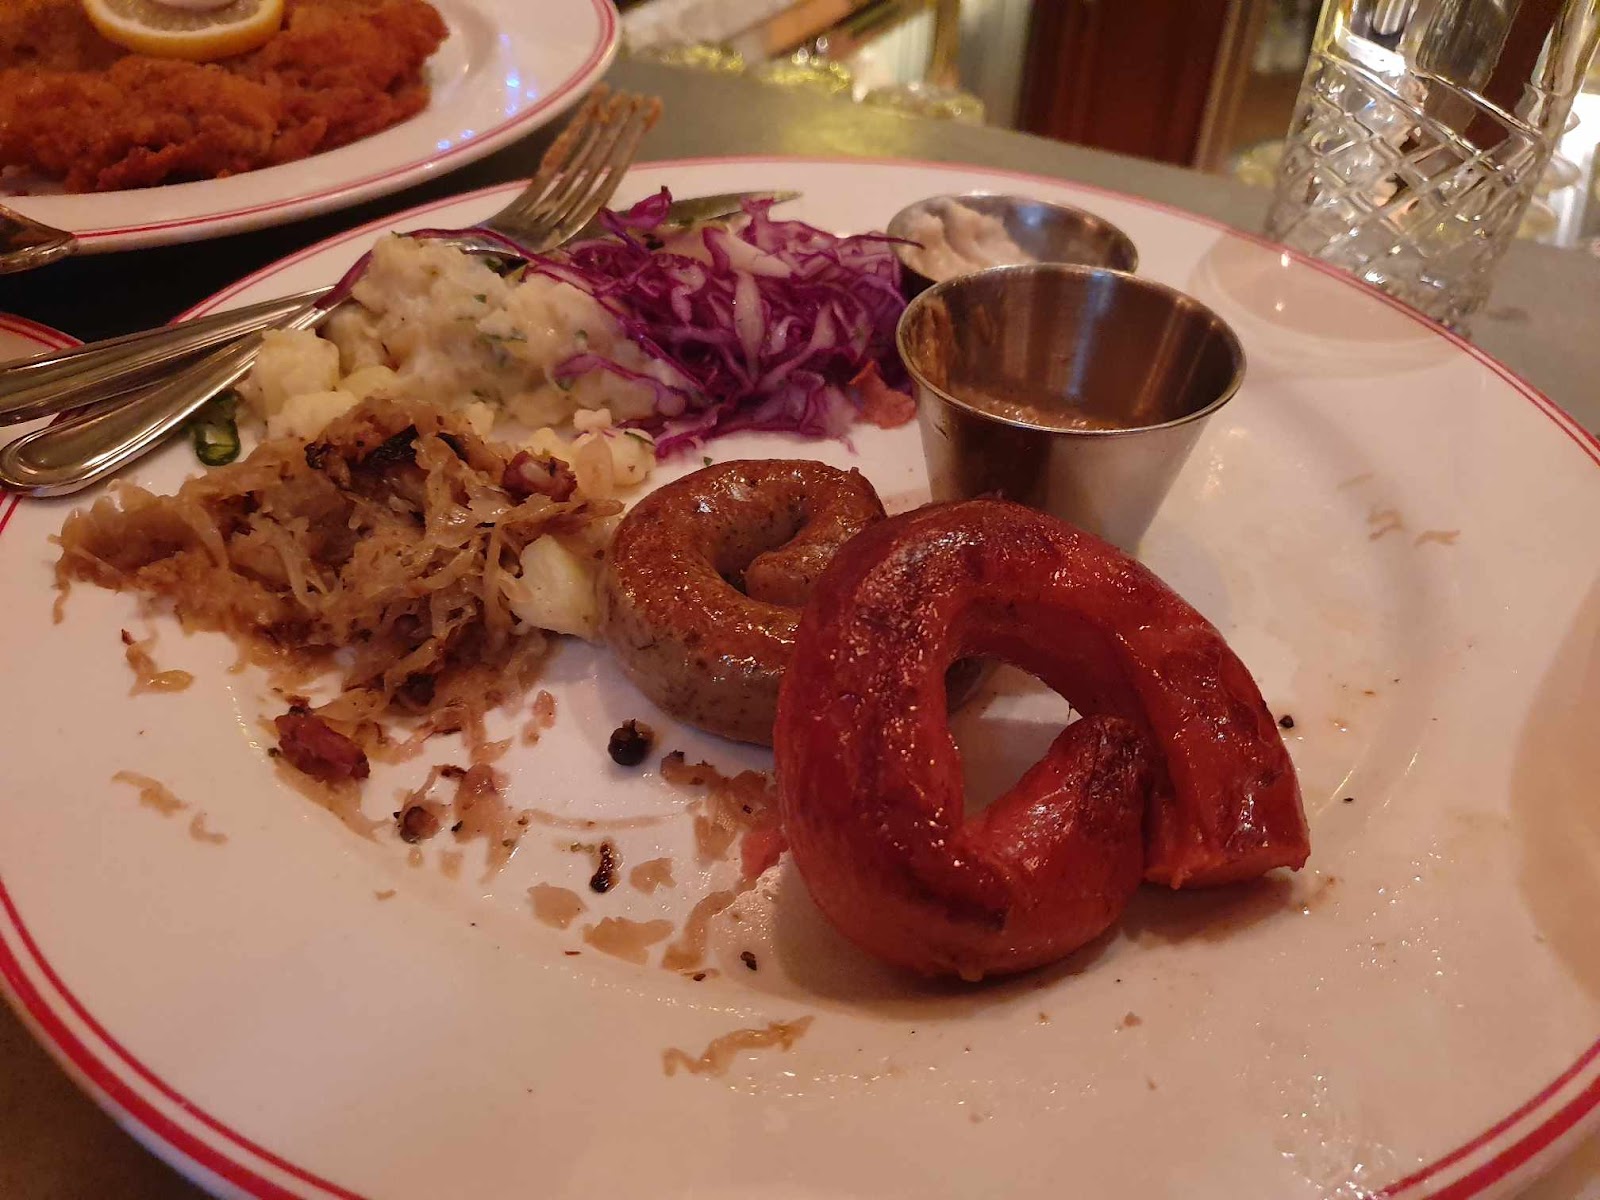 Schnitzel & Schnaps sausages with sauerkraut and potatoes